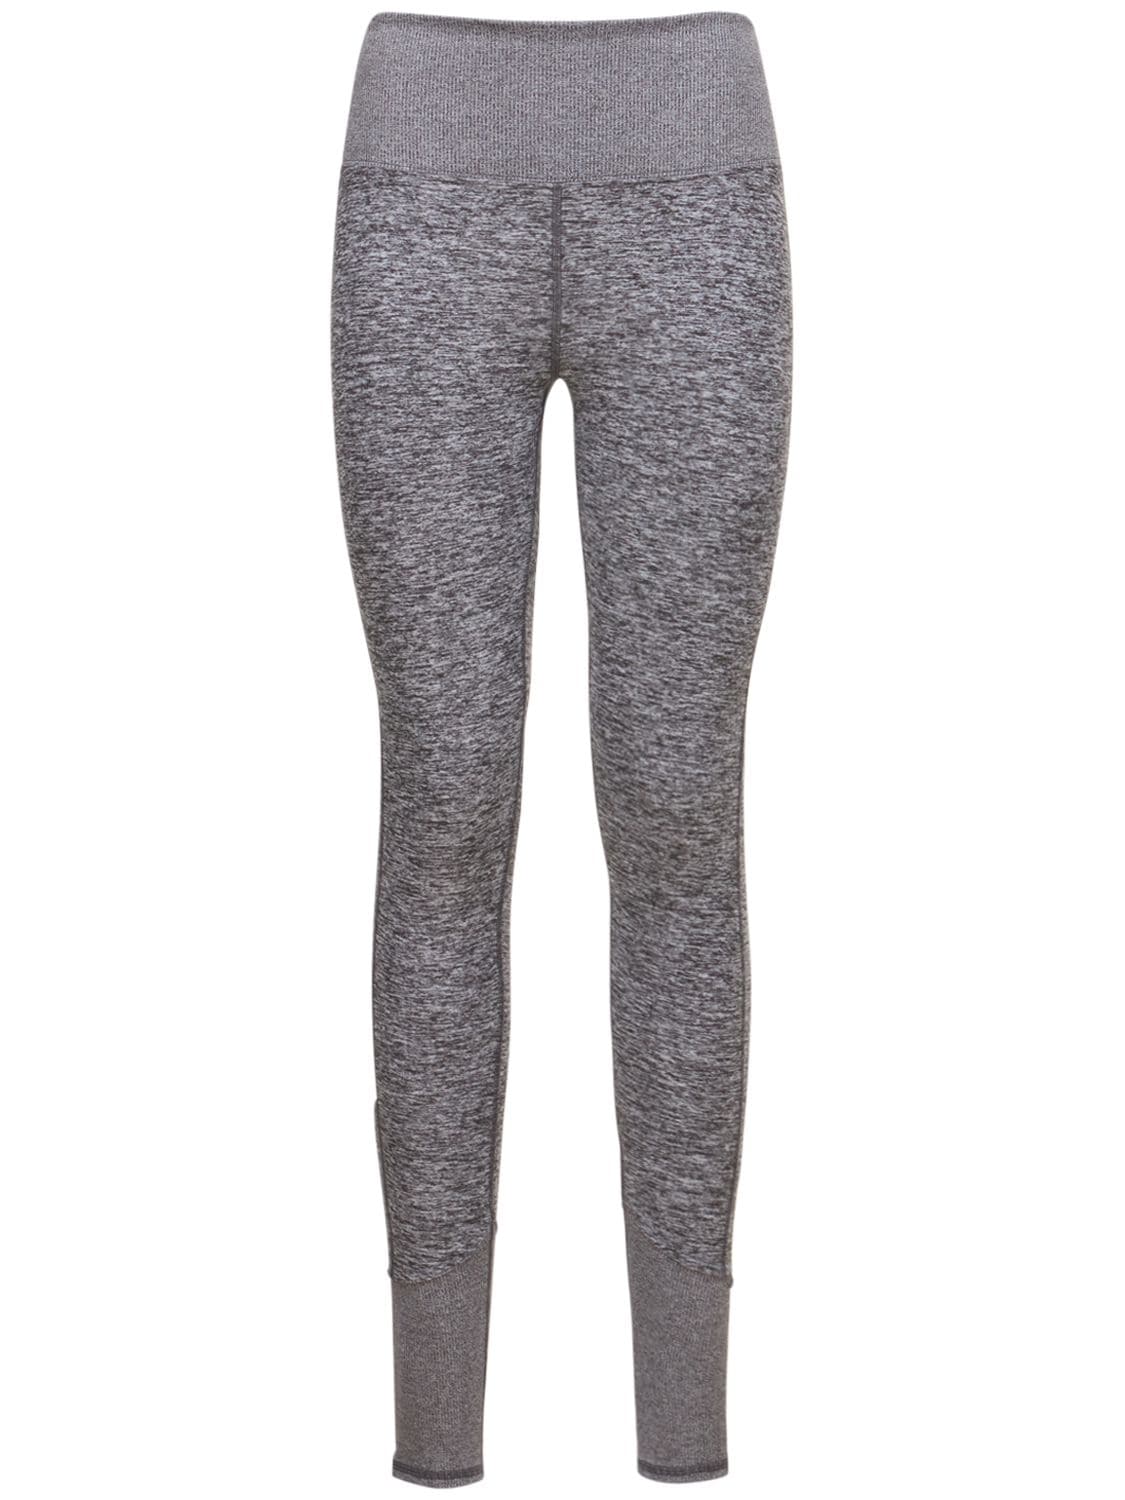 Alo Yoga Alosoft XS set (bra + shorts) in Zinc Heather (light gray